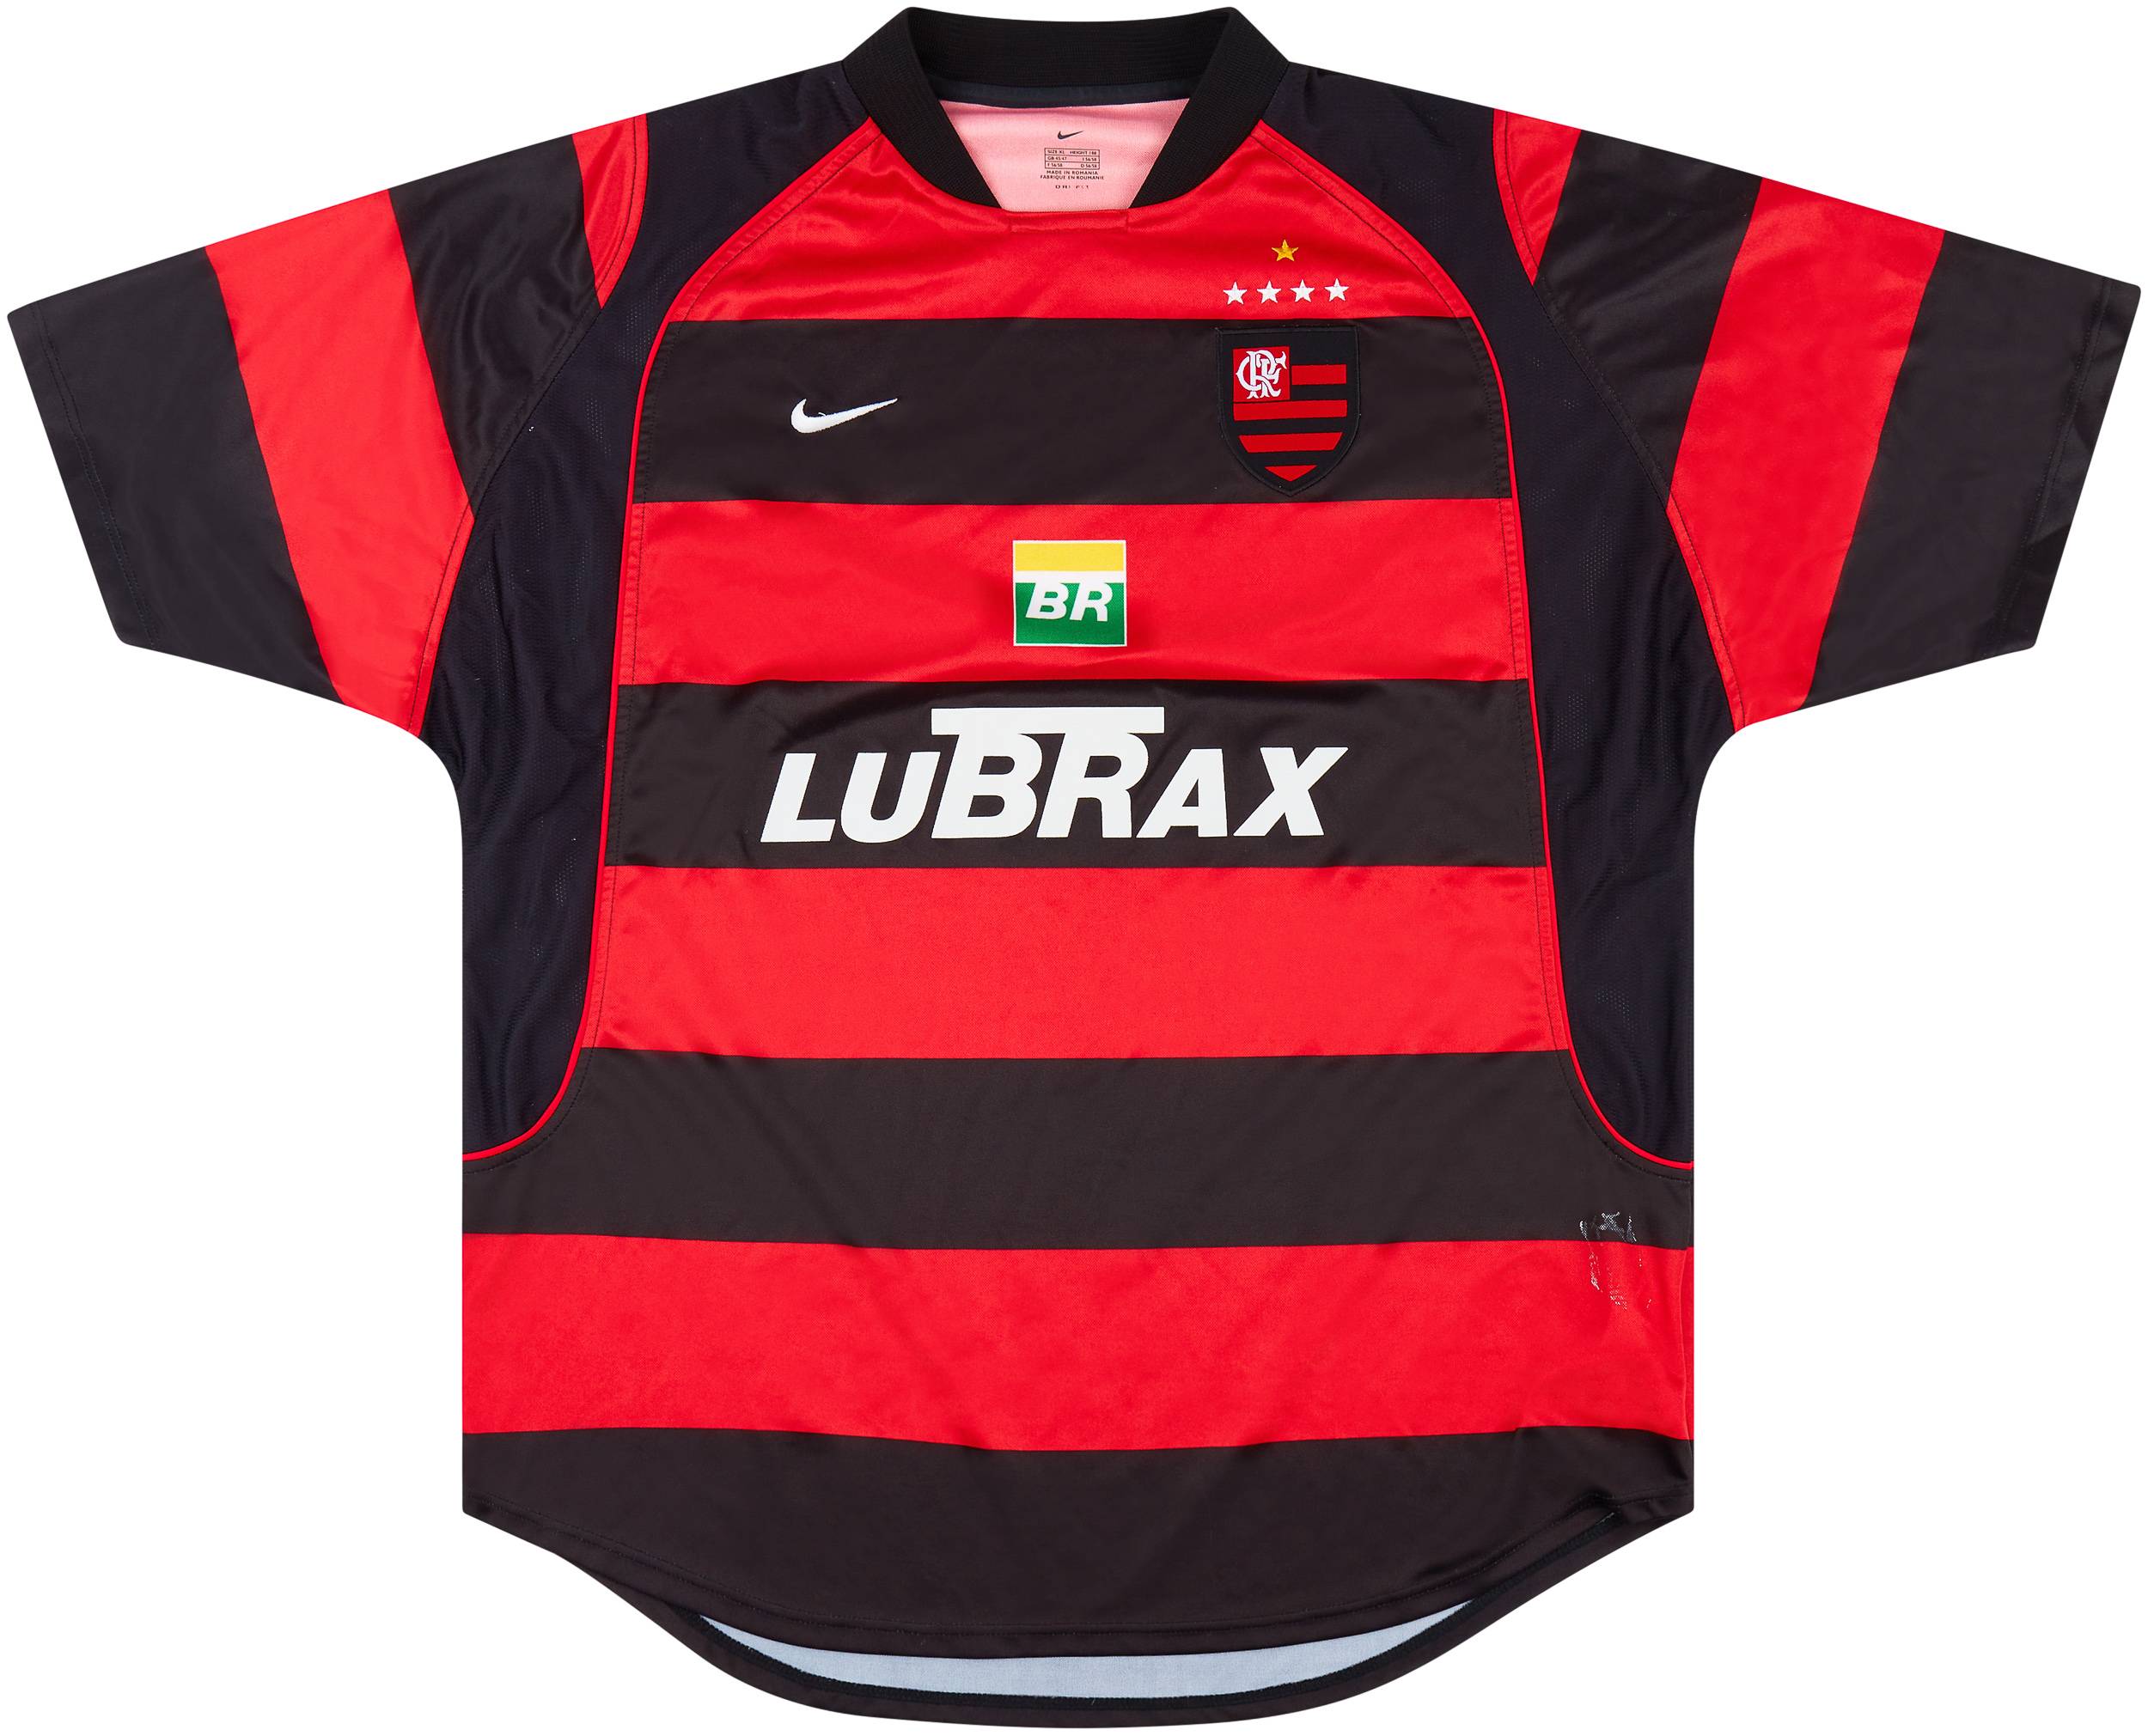 2002-04 Flamengo Home Shirt - 9/10 - (XL)